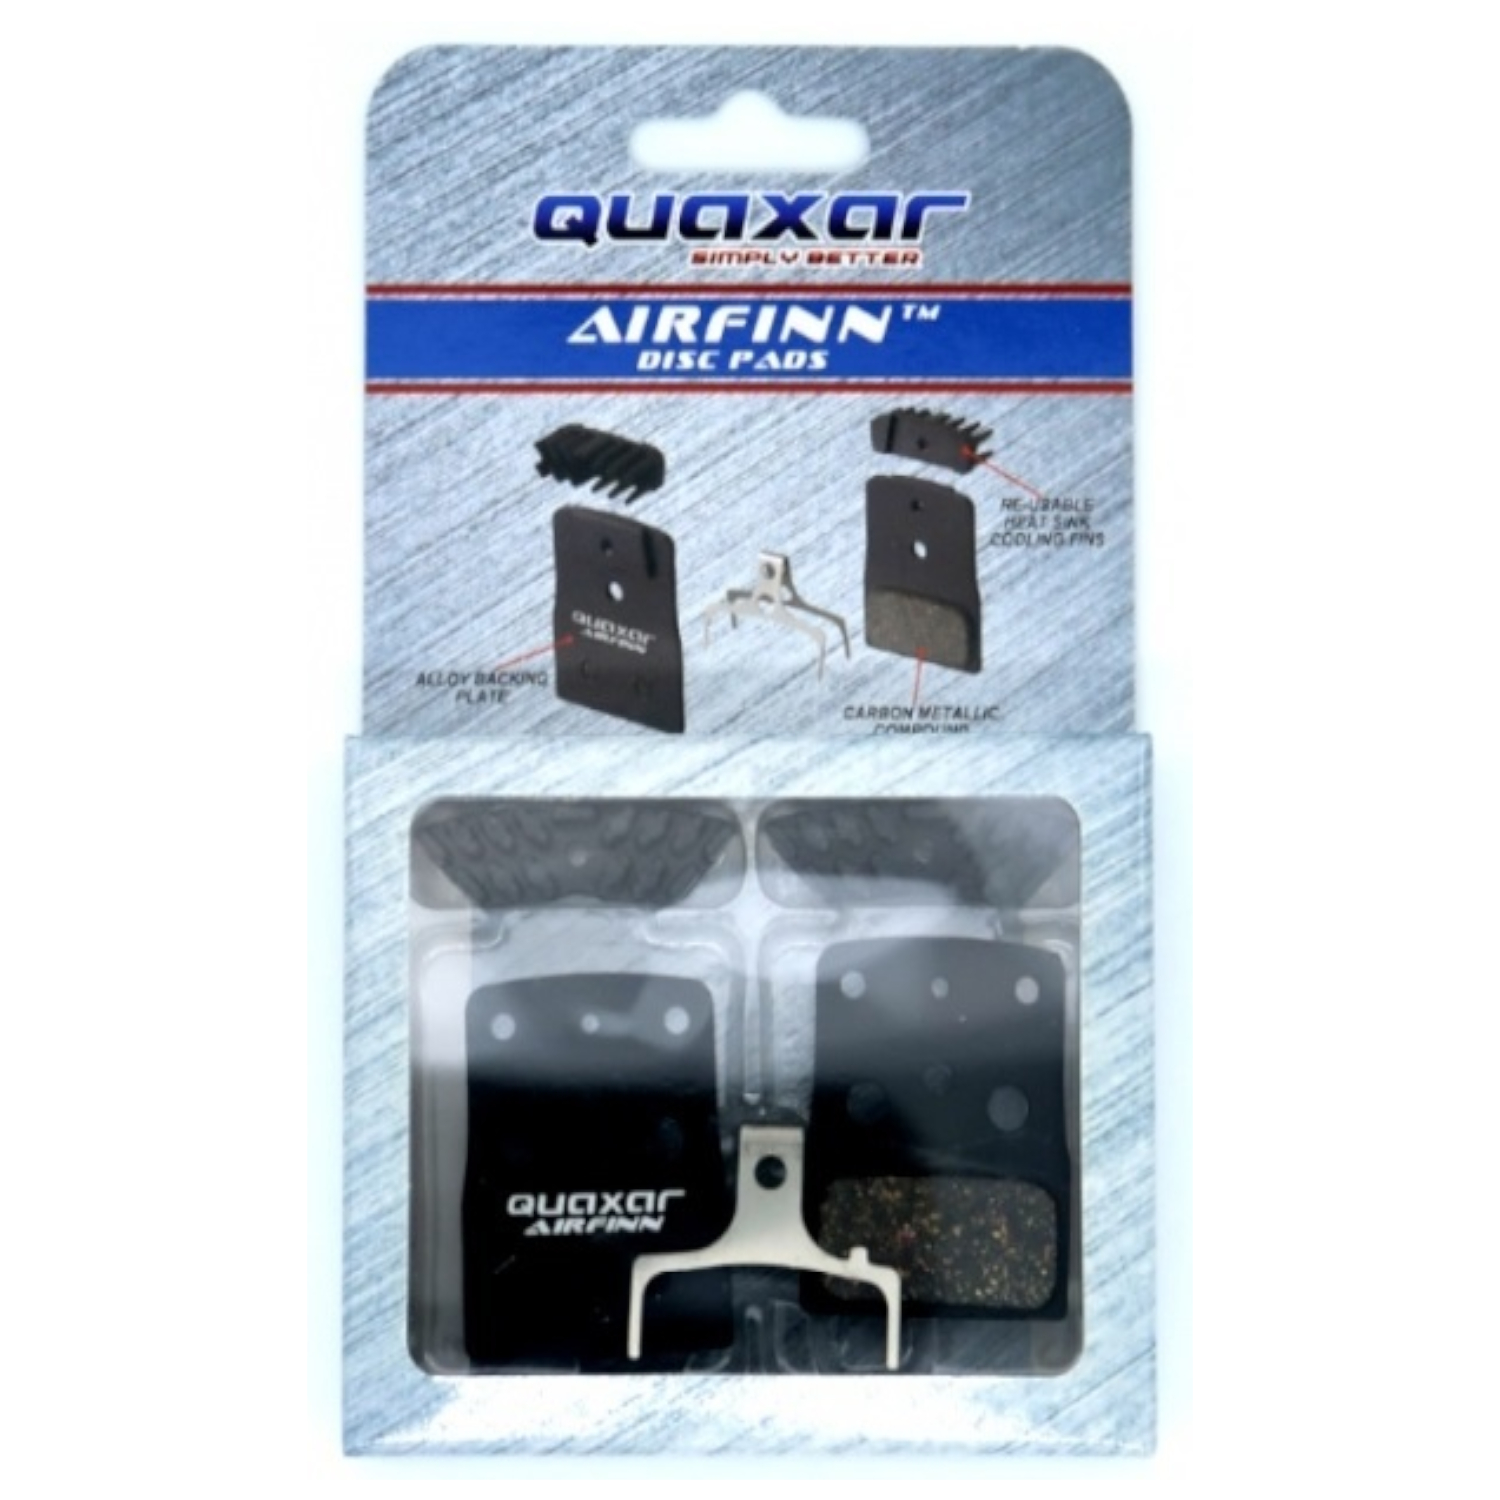 QUAXAR Disc-Pads AF1015BK für Shimano inklusive Airfinn, CARBON METALLIC